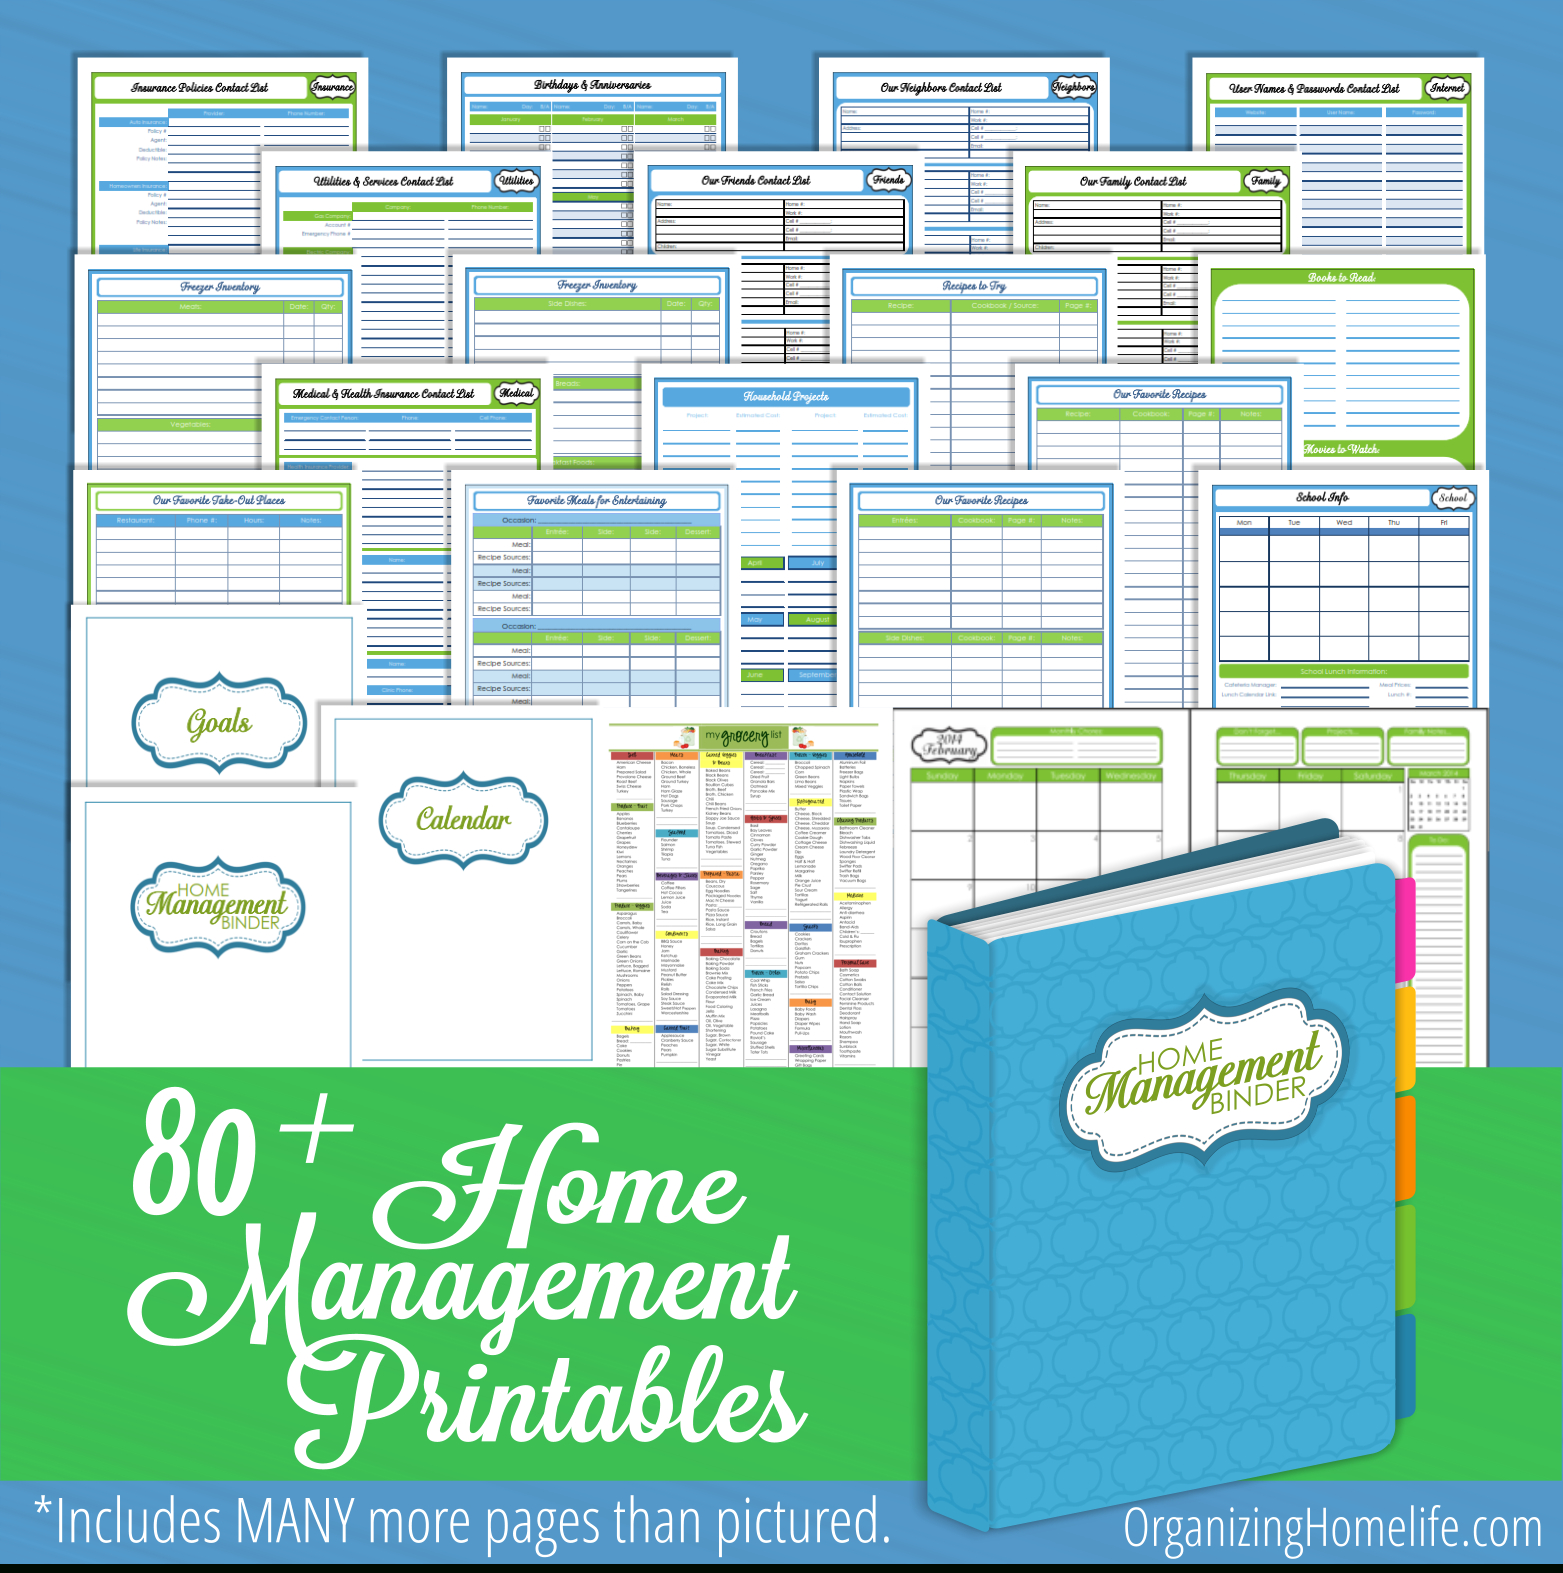 Organizing Homelife Home Management Binder Printables - Clean Mama - Free Printable Household Binder